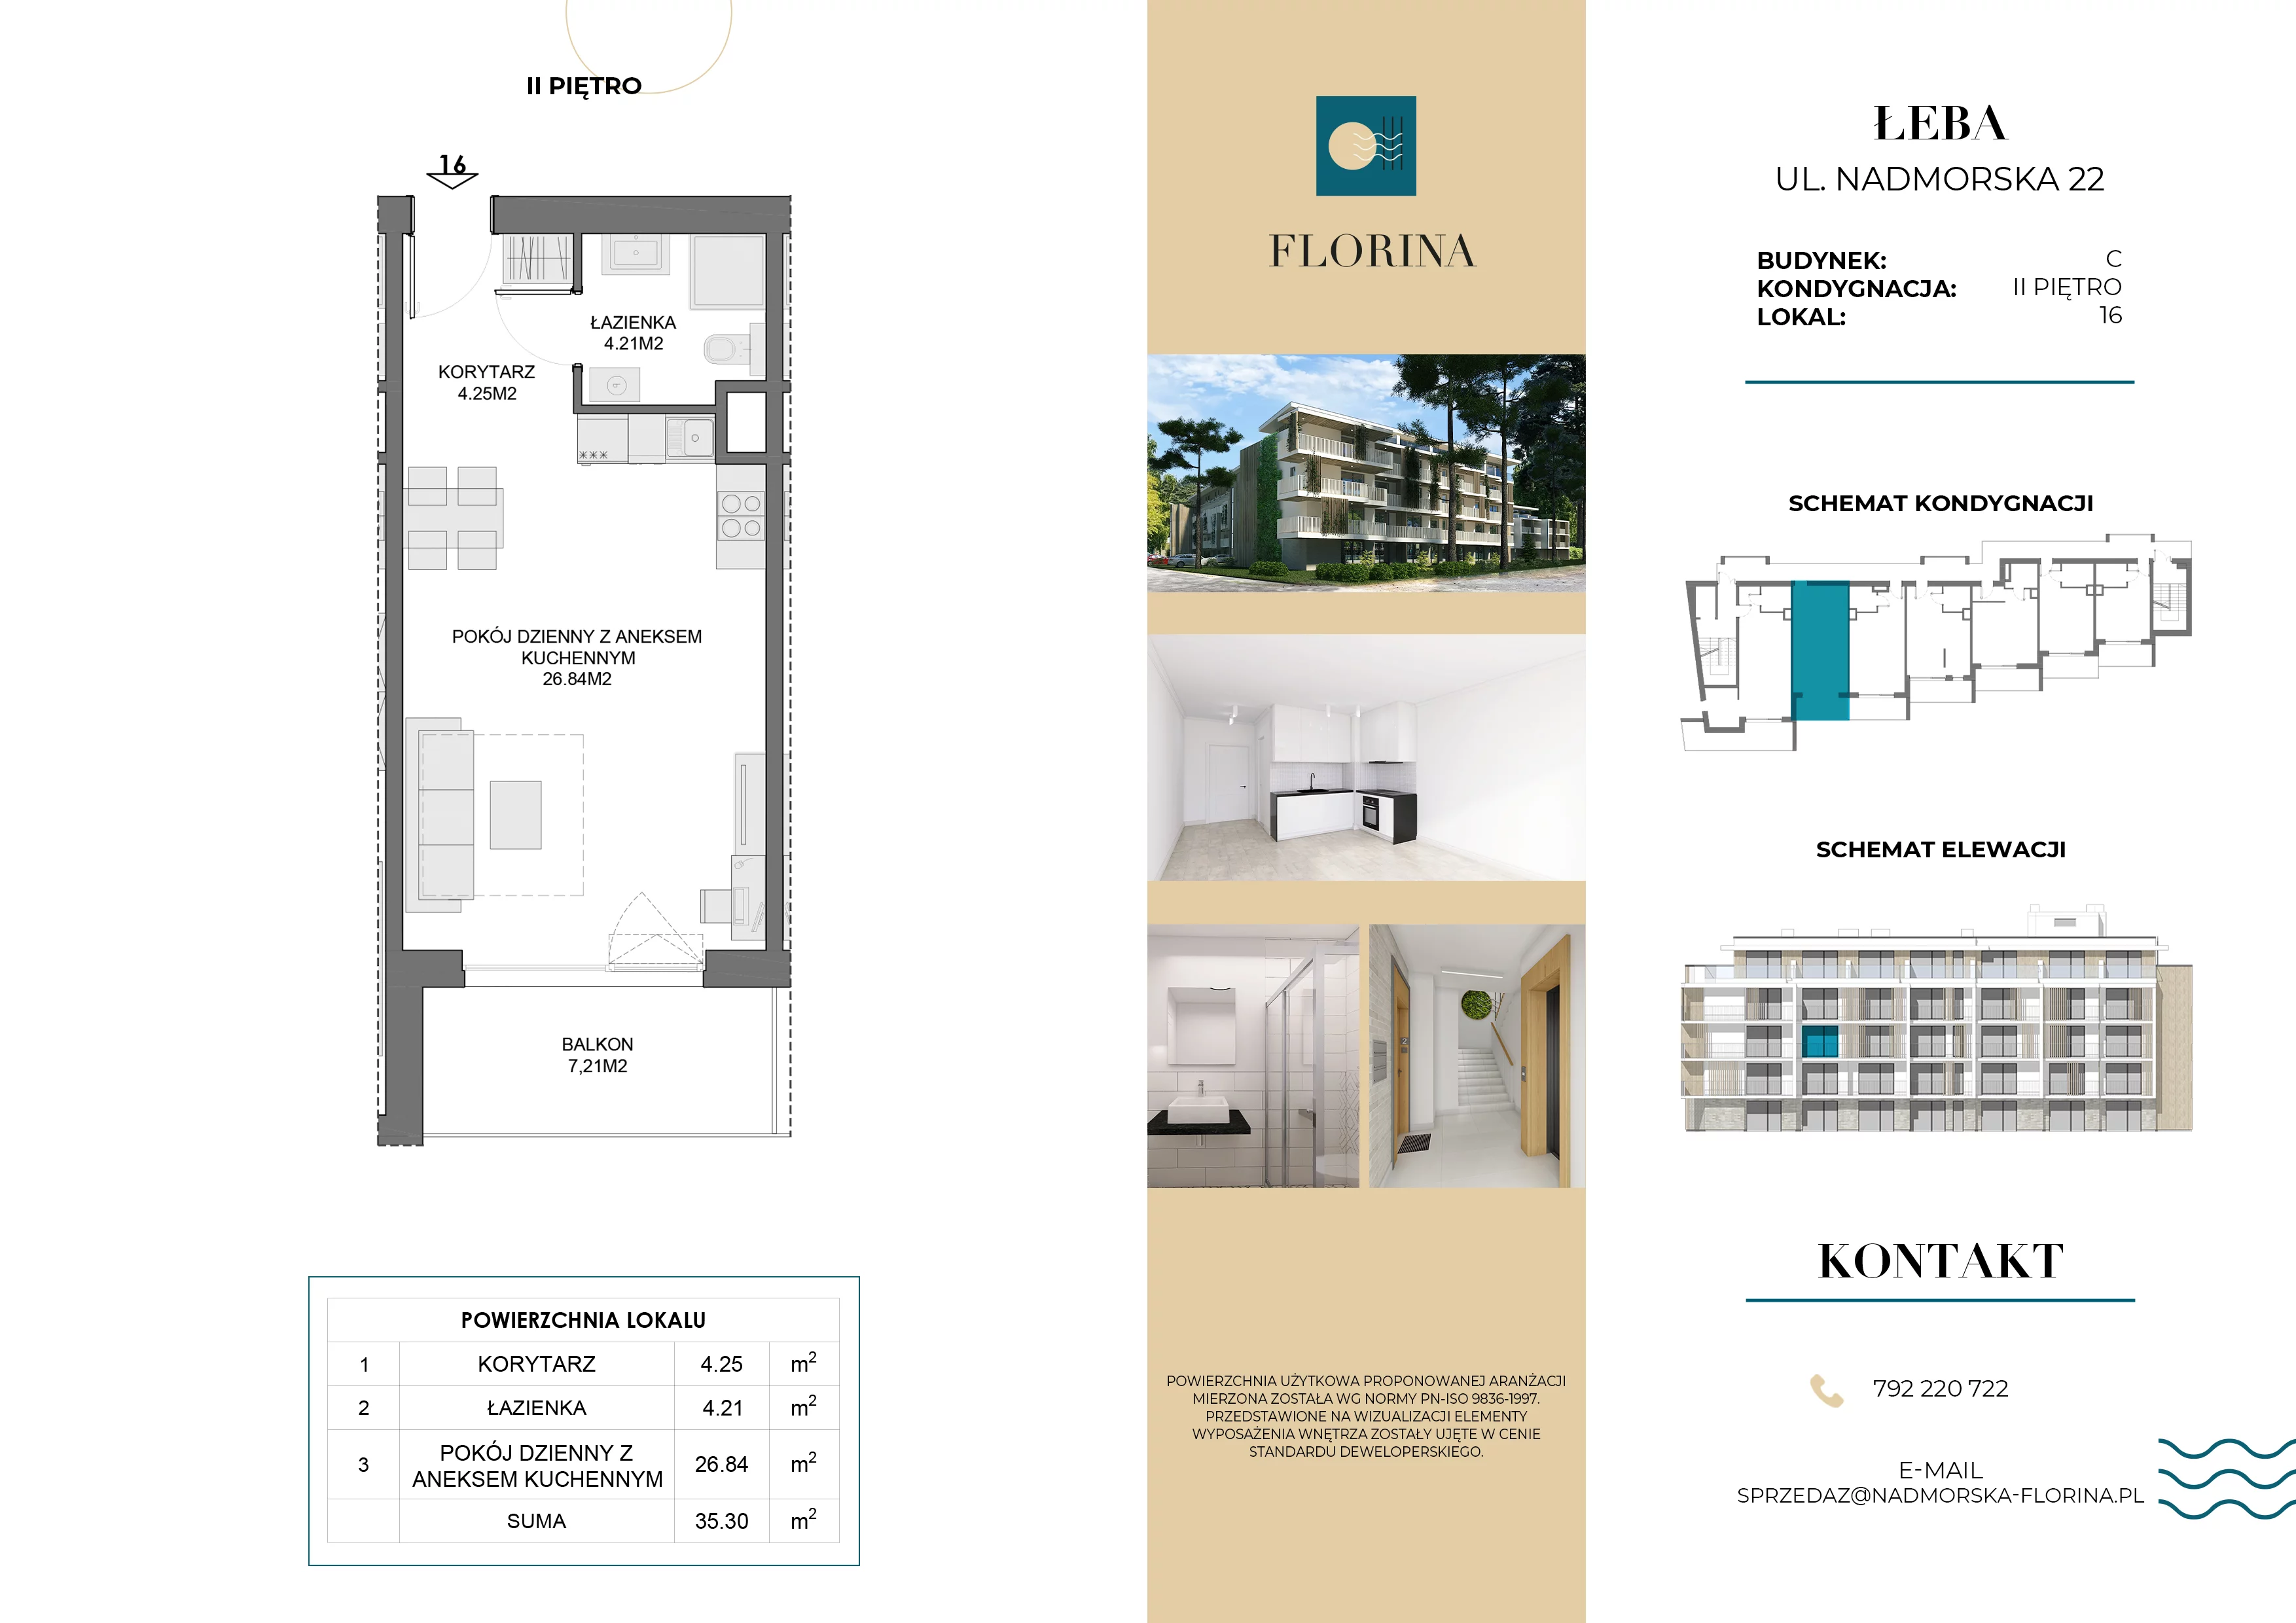 Apartament inwestycyjny 35,30 m², piętro 2, oferta nr C.M16, Nadmorska Florina, Łeba, ul. Nadmorska